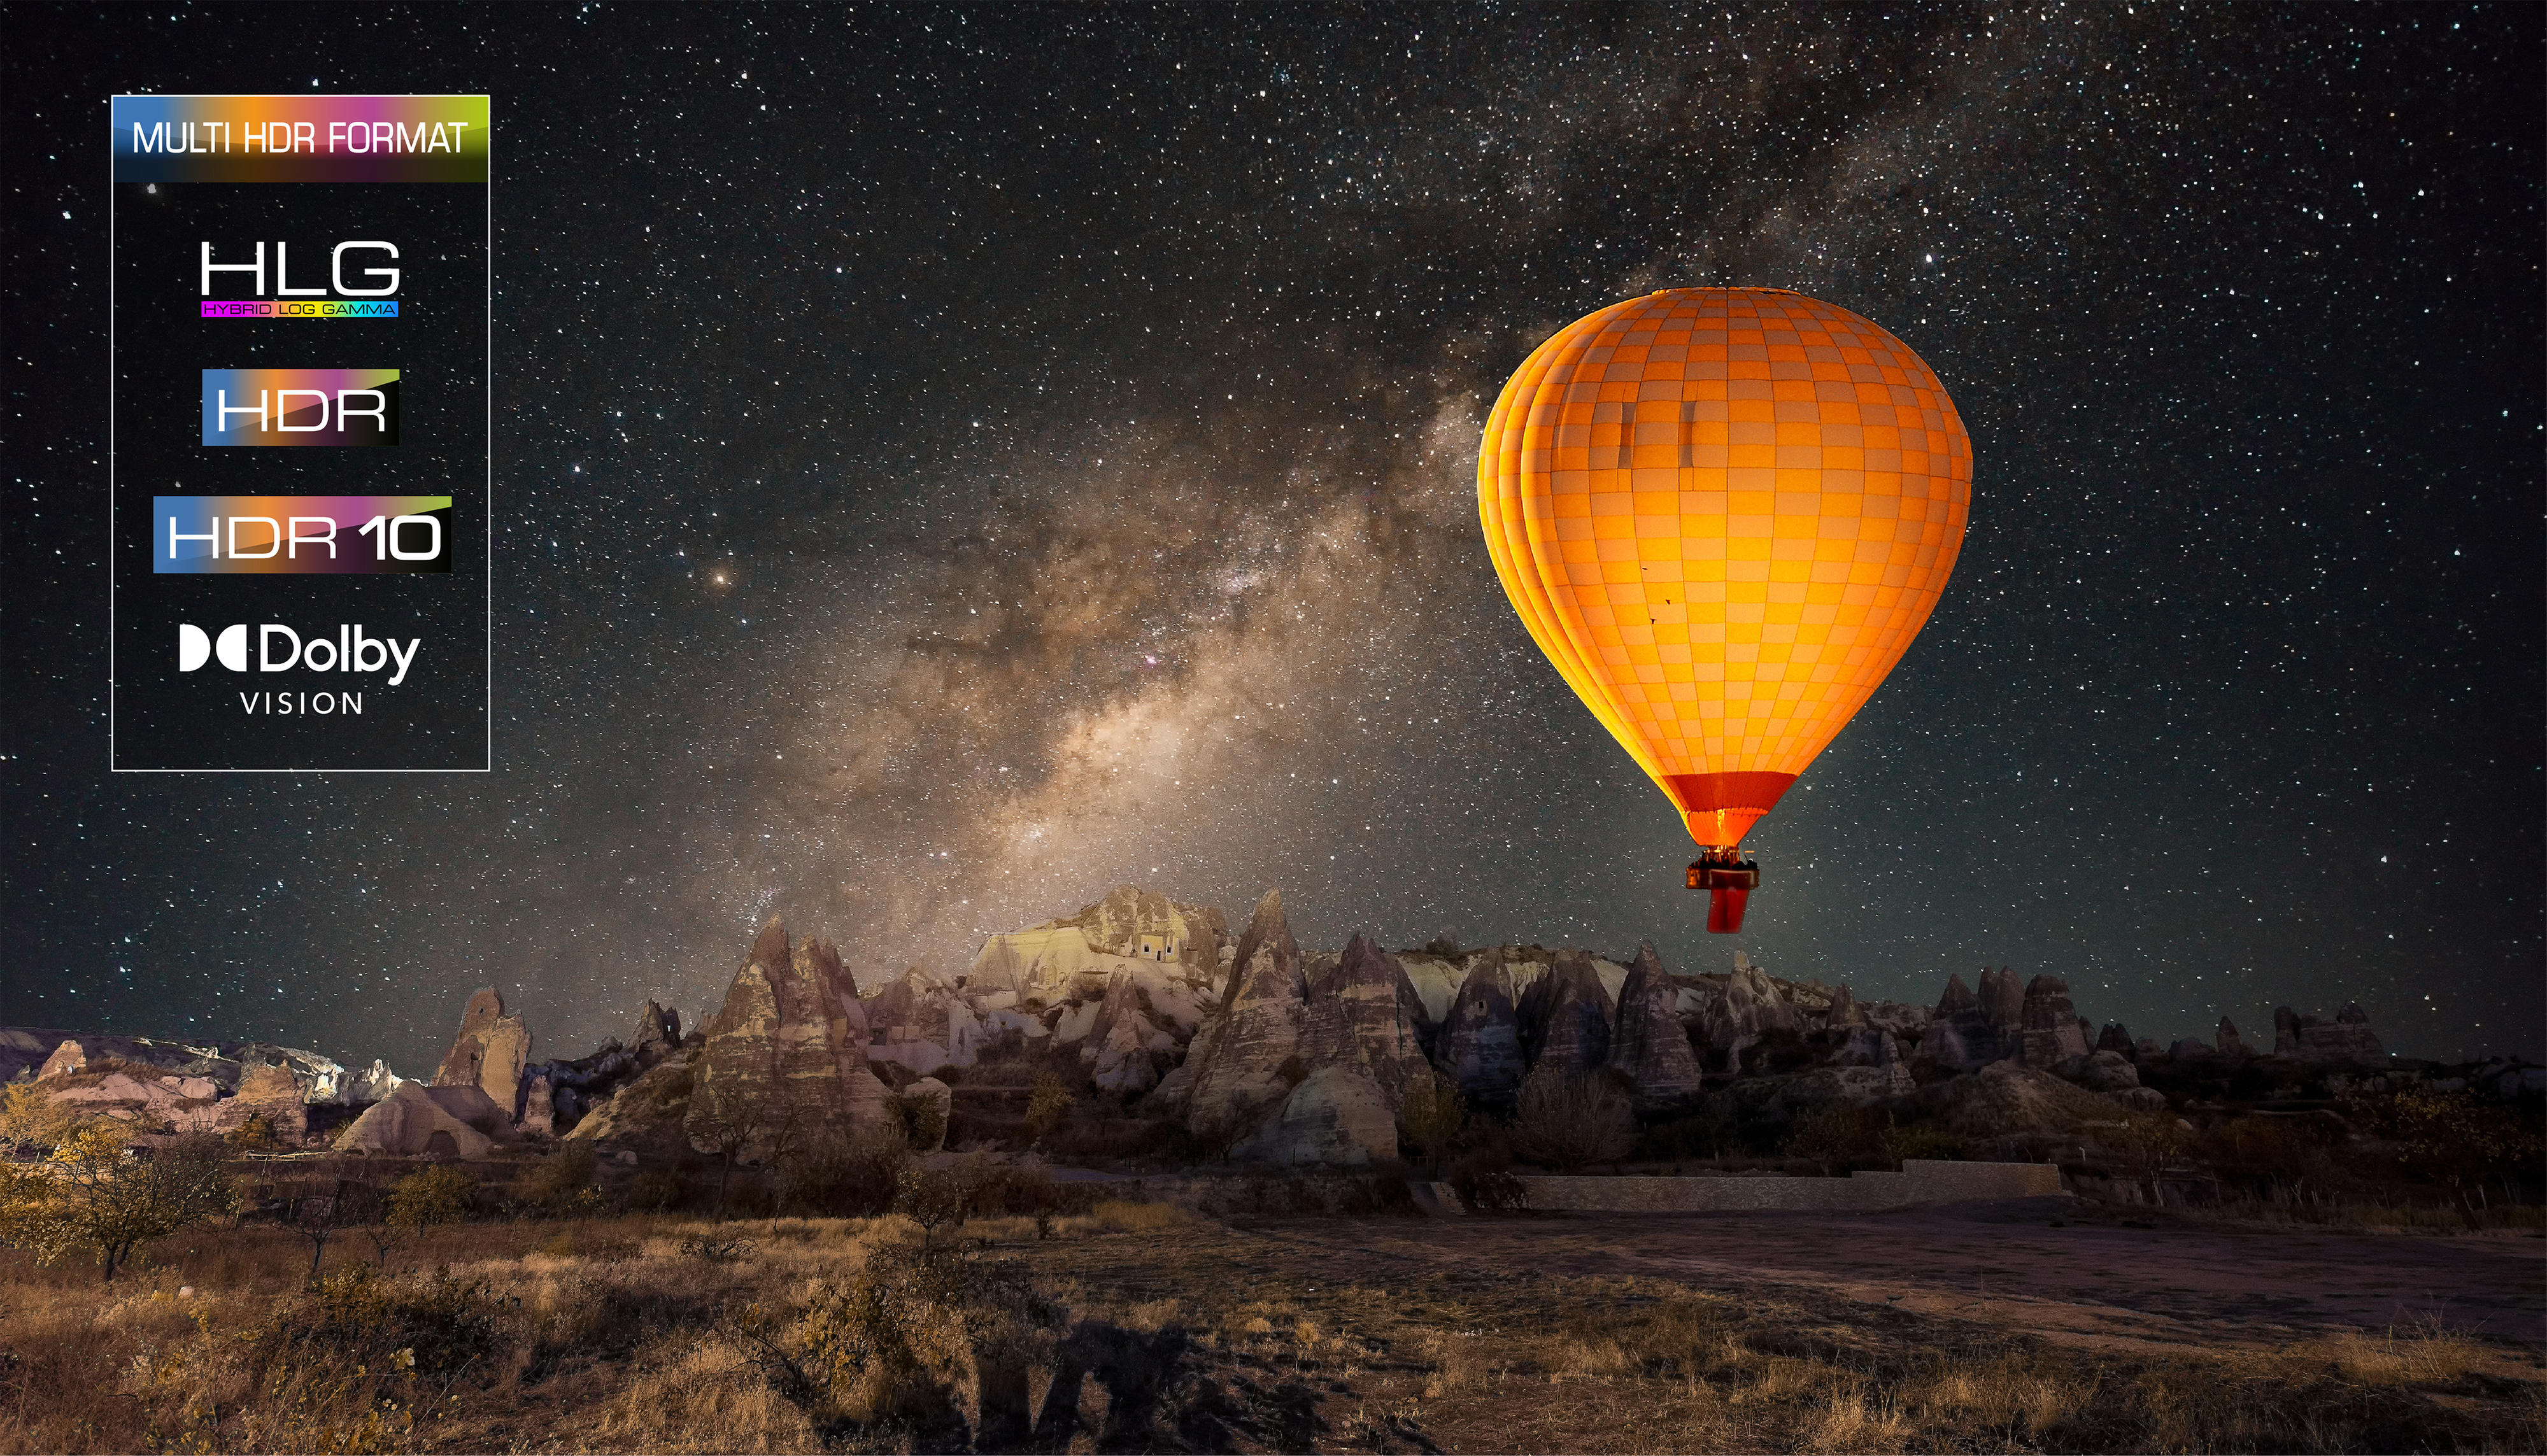 TCL - Luftballong om natten med HDR text